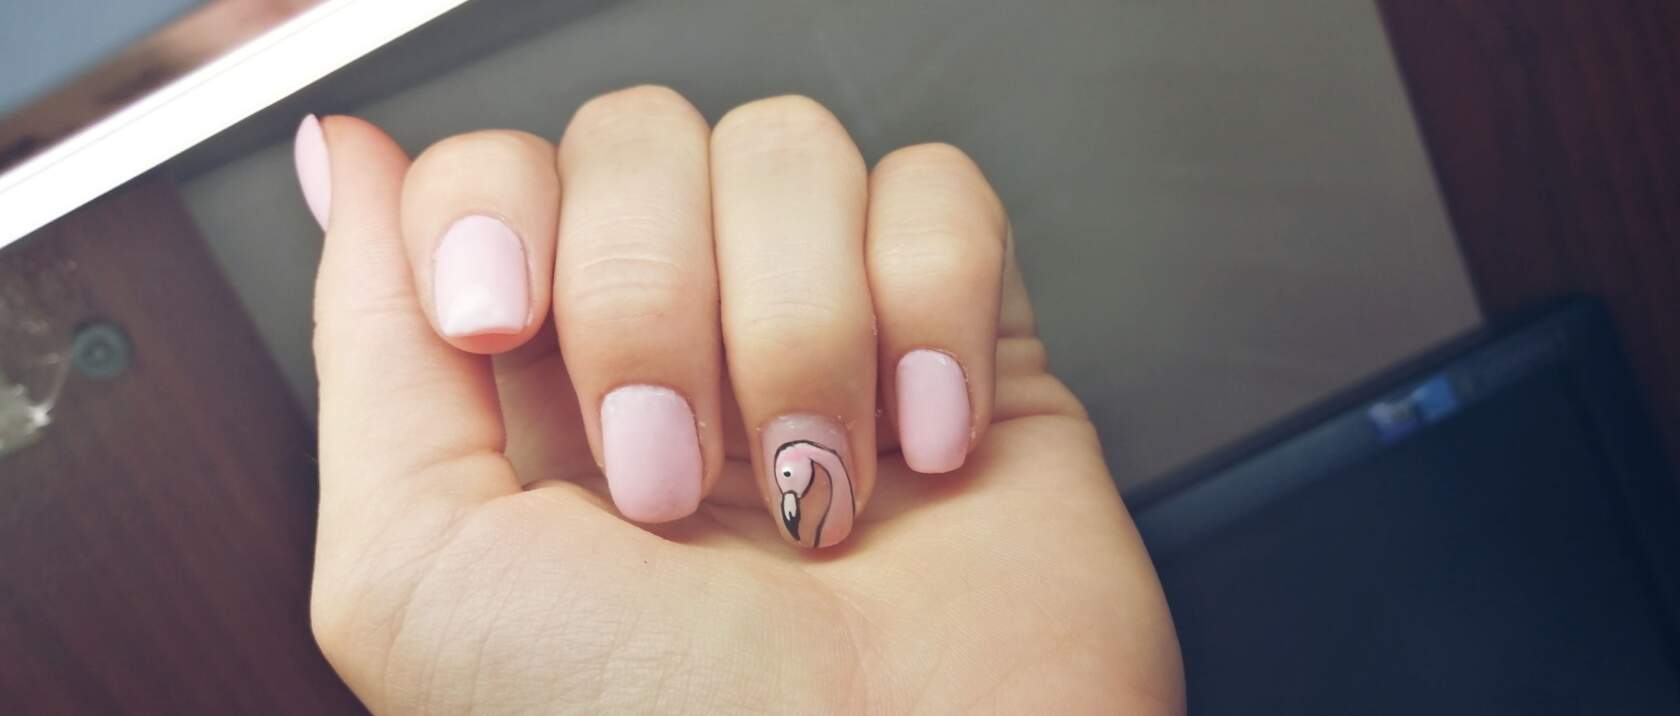 Маникюр с фламинго в розовом цвете на короткие ногти.